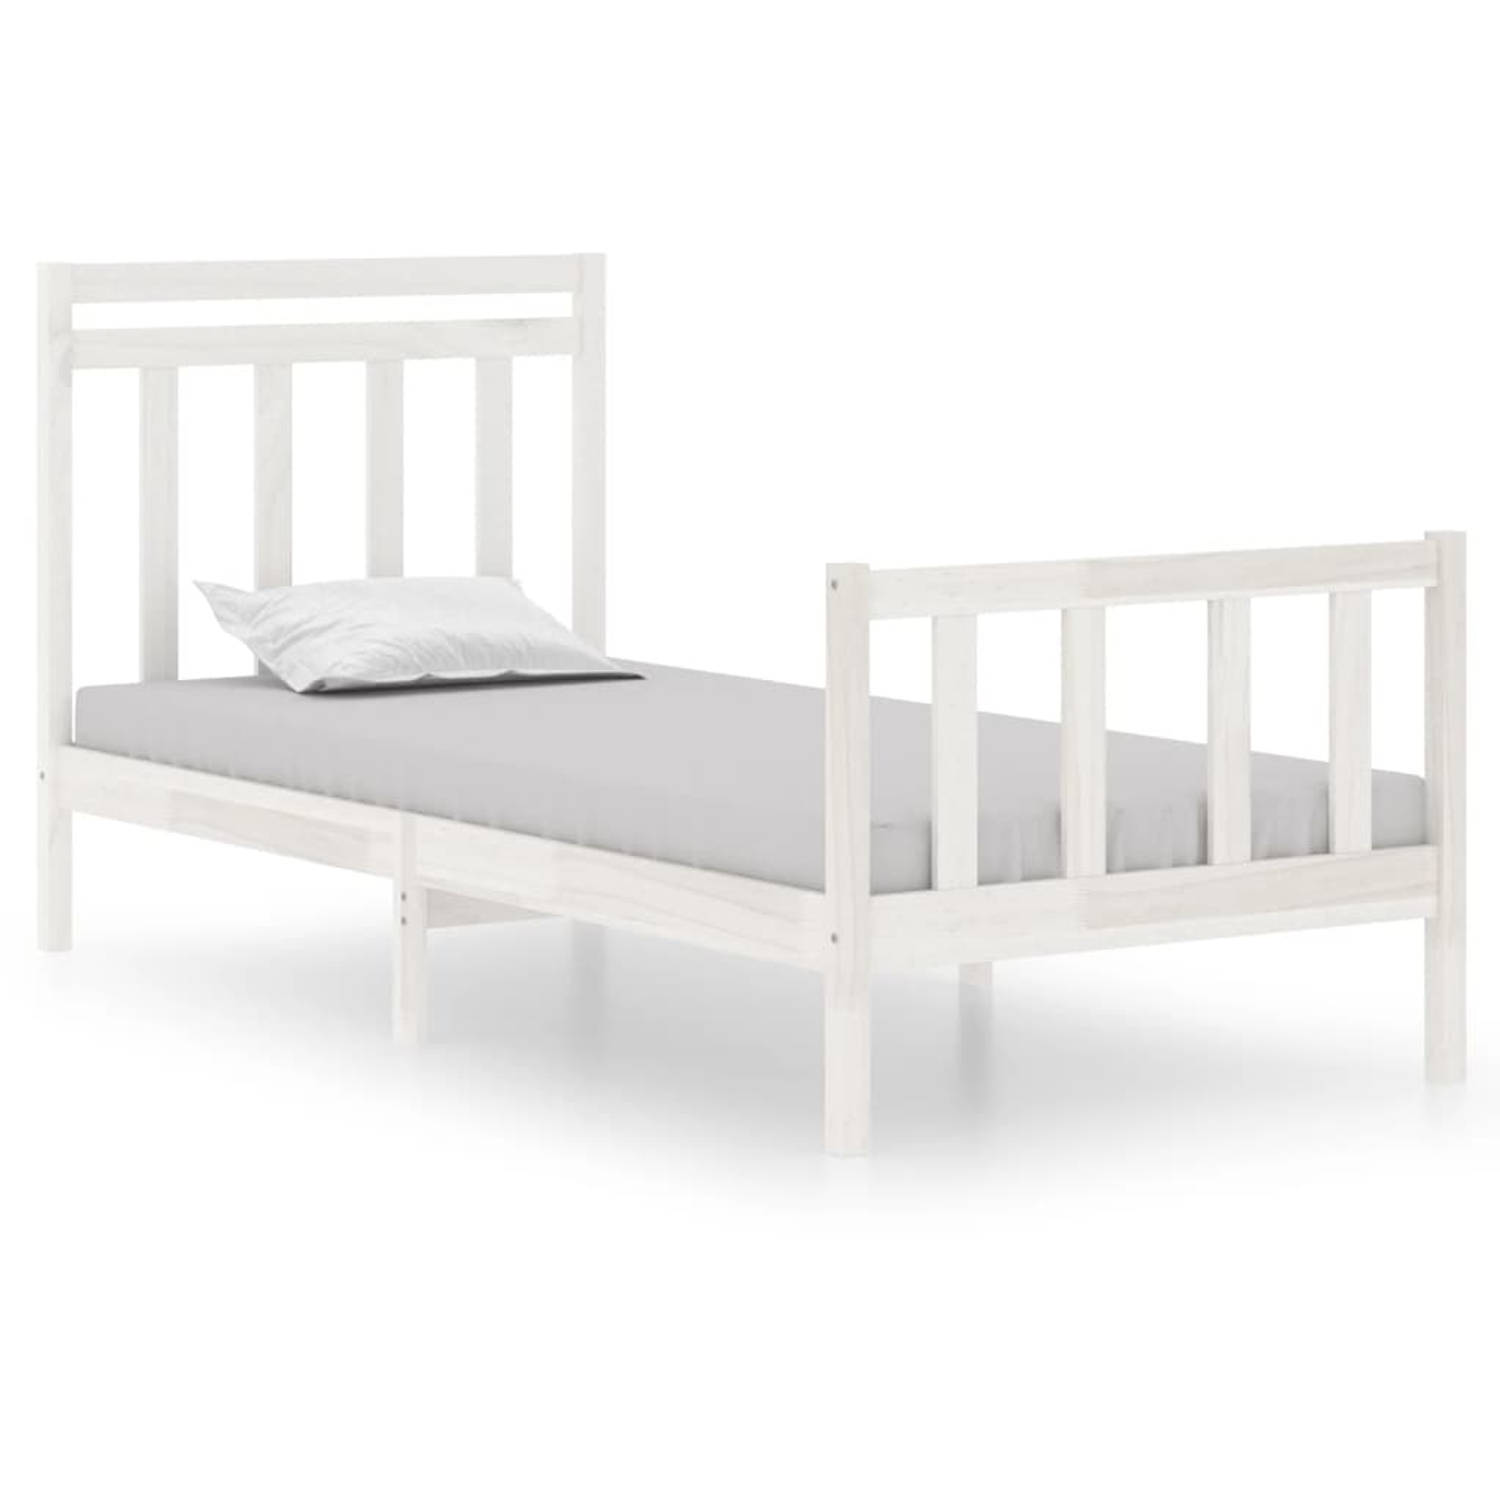 The Living Store Bedframe massief hout wit 90x190 cm 3FT Single - Bedframe - Bedframes - Eenpersoonsbed - Bed - Bedombouw - Ledikant - Houten Bedframe - Eenpersoonsbedden - Bedden